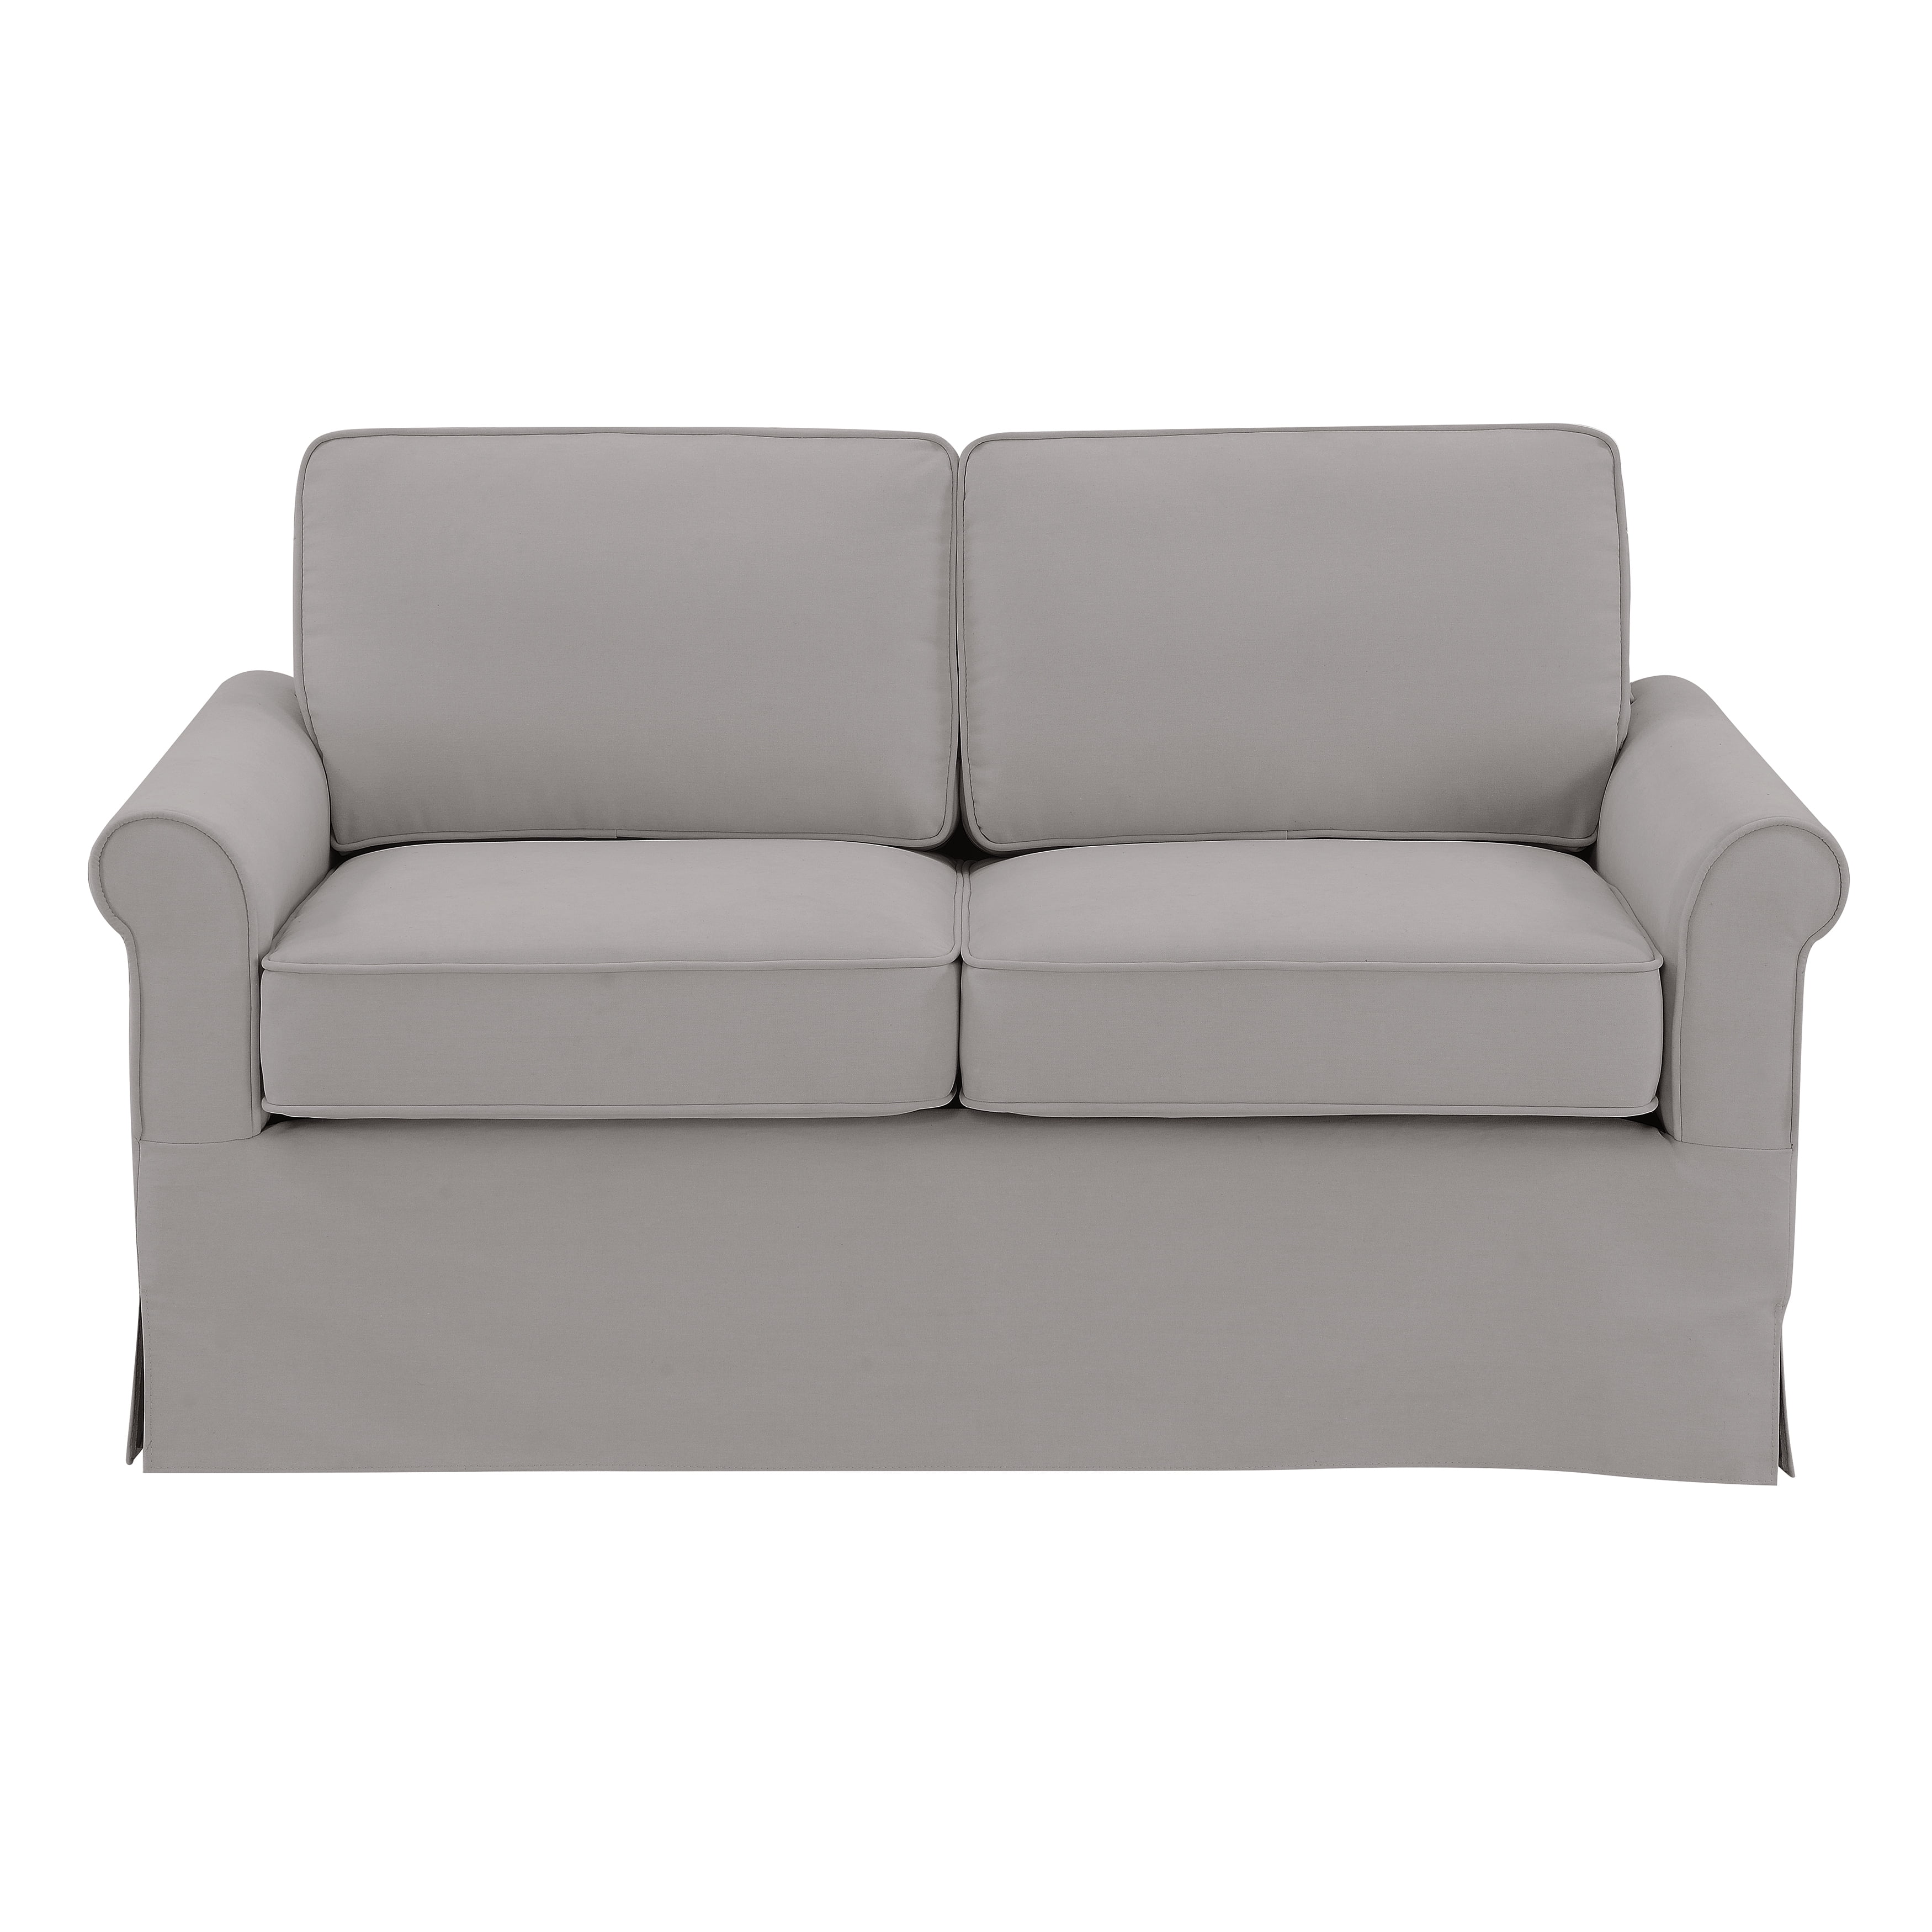 Accentrics Home Modern Arm Sliper Style Sofa In Storm Gray